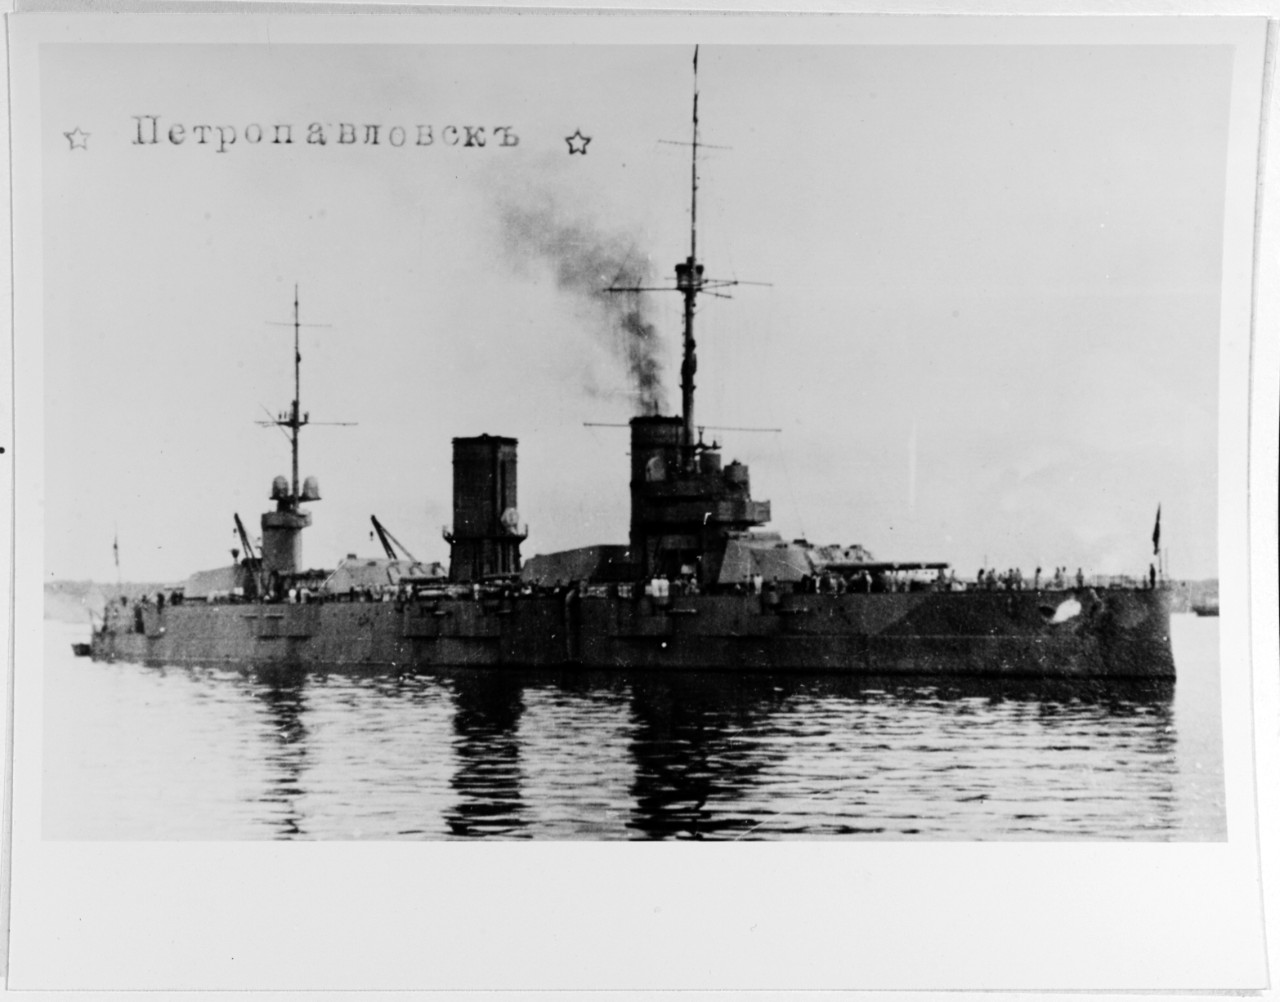 PETROPAVLOVSK (Russian Battleship, 1911-41)